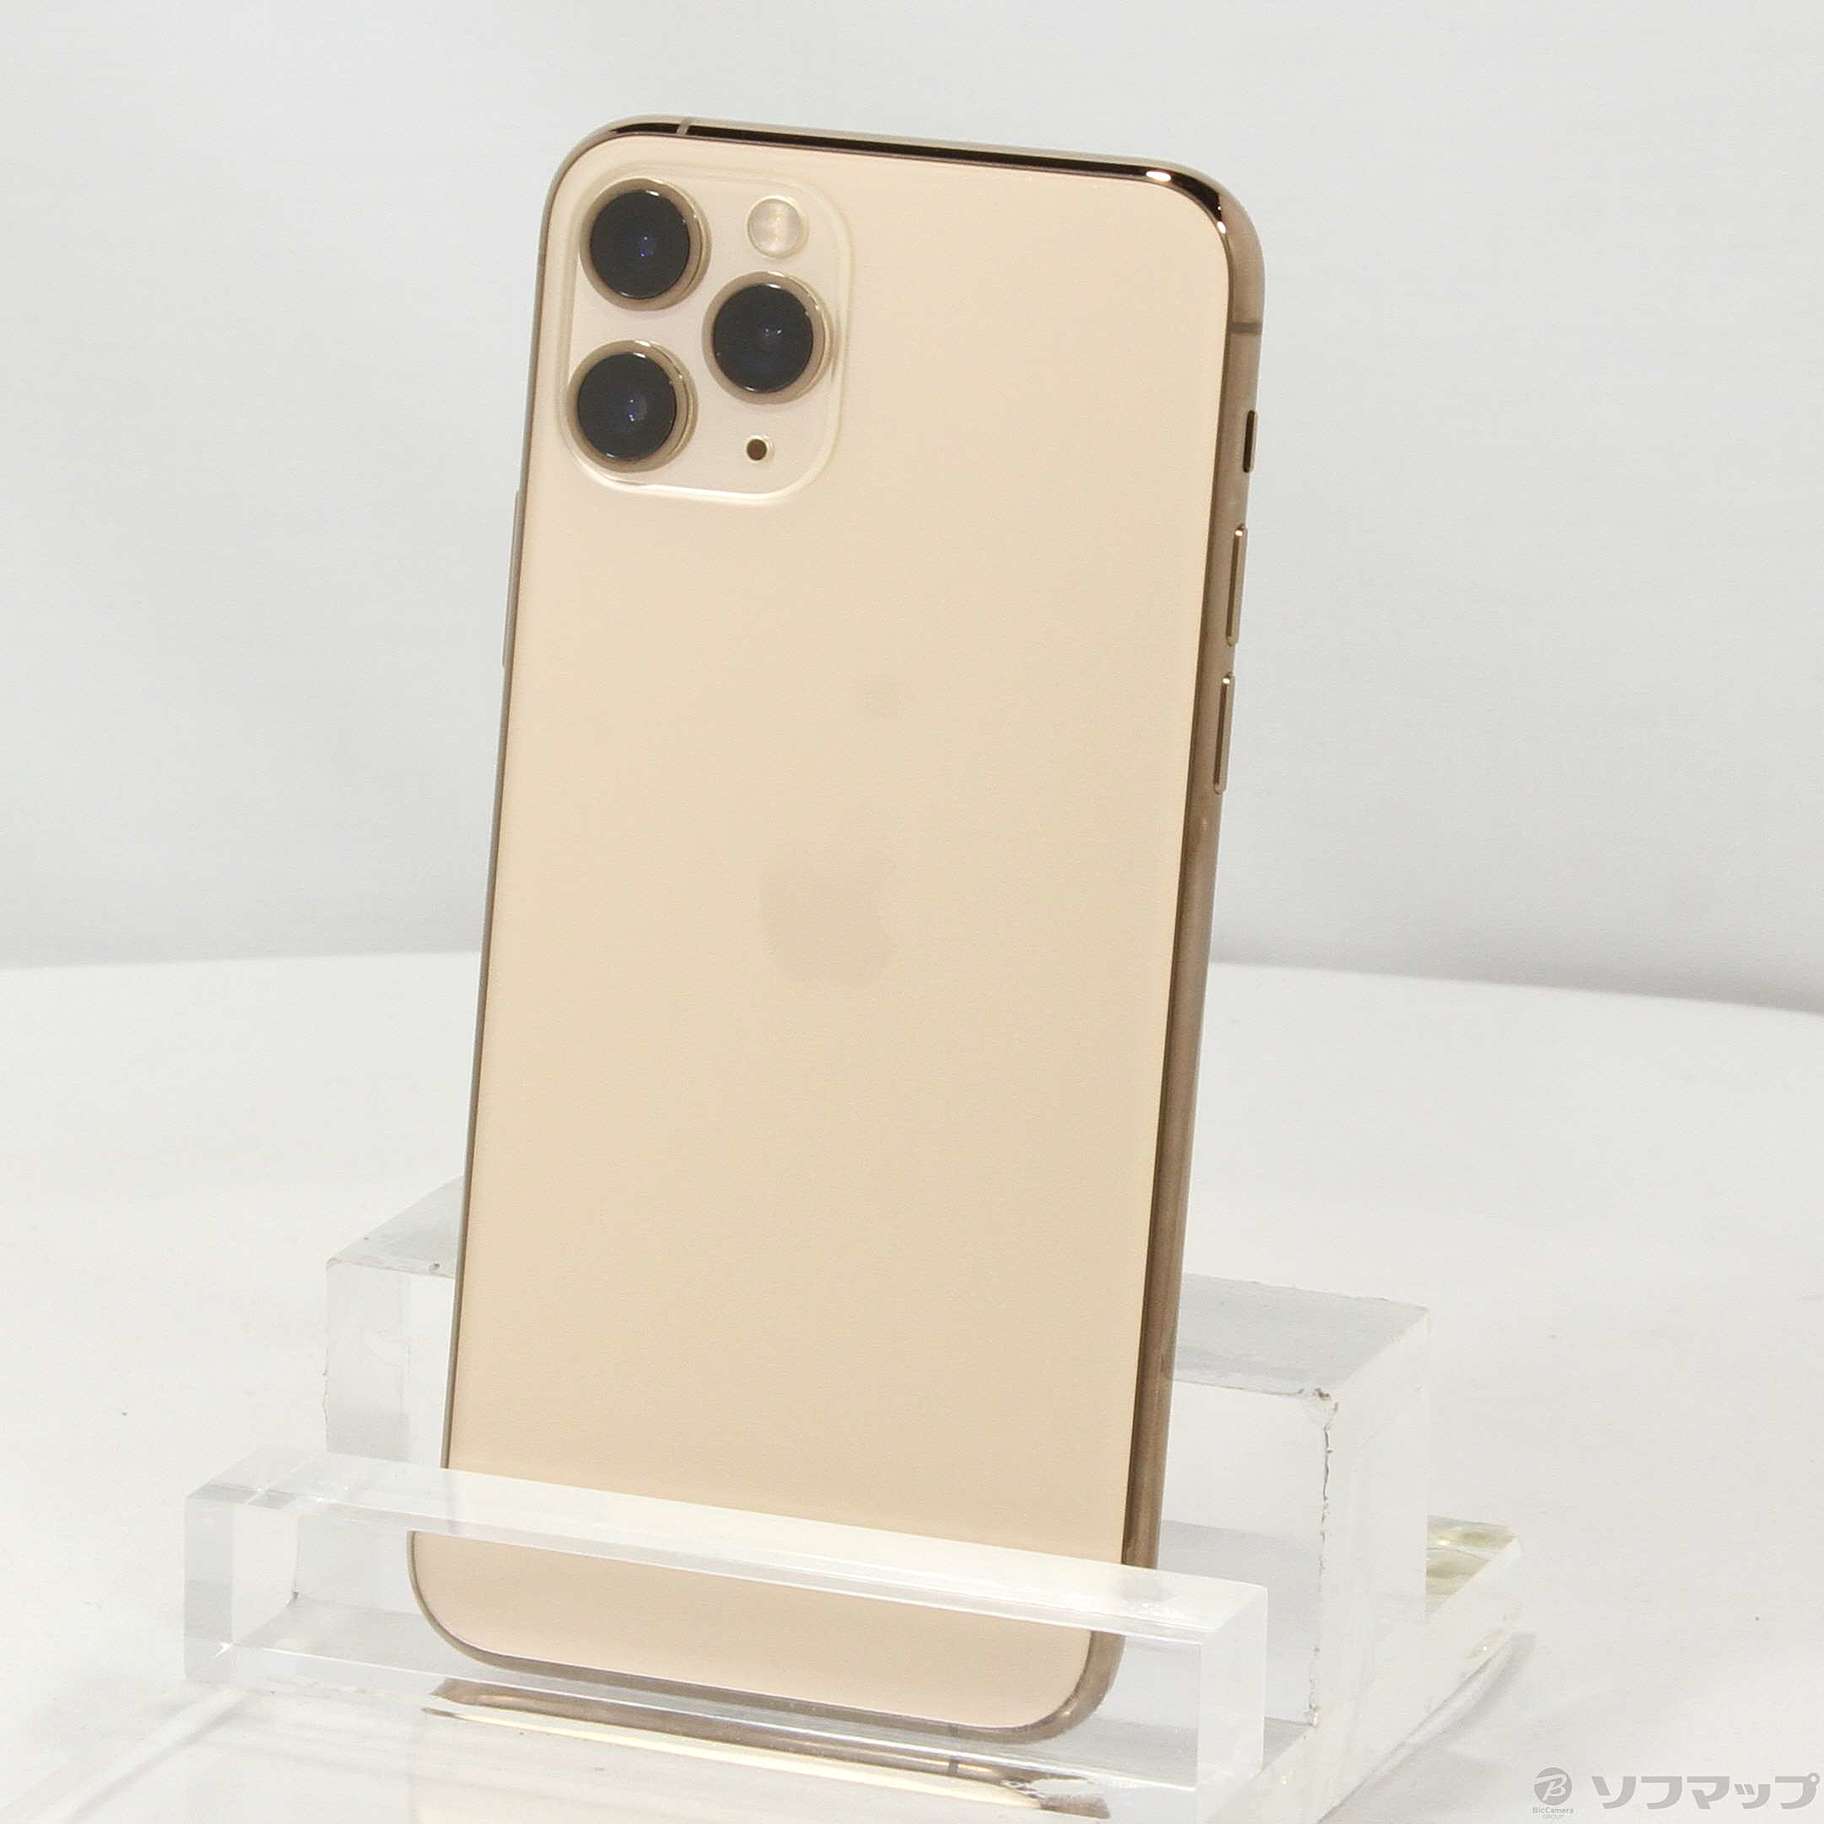 iPhone 11 Pro 64GB SIMフリー [ゴールド] 中古(白ロム)価格比較 